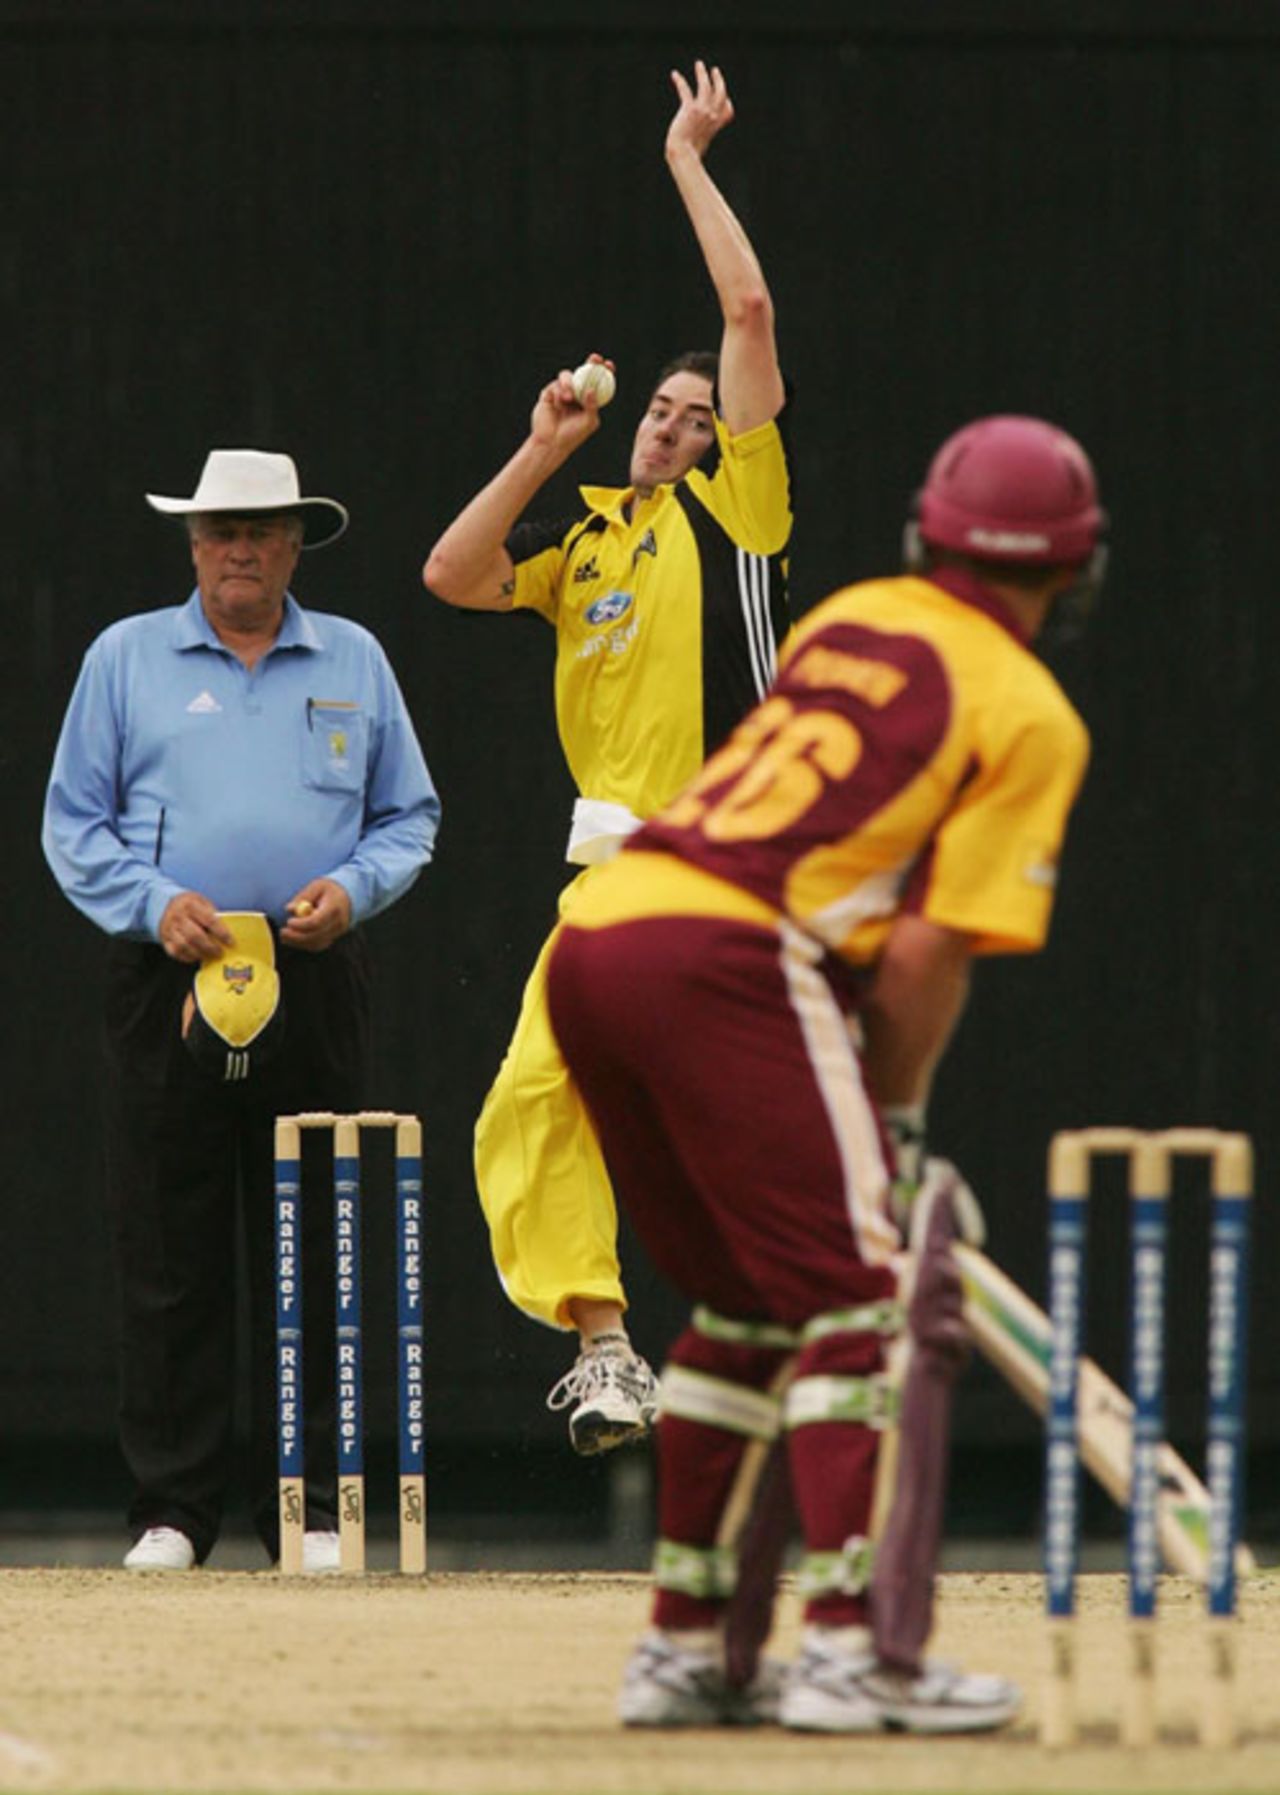 Ben Edmondson poised to unleash one, Queensland v Western Australia, Brisbane, January 25, 2007